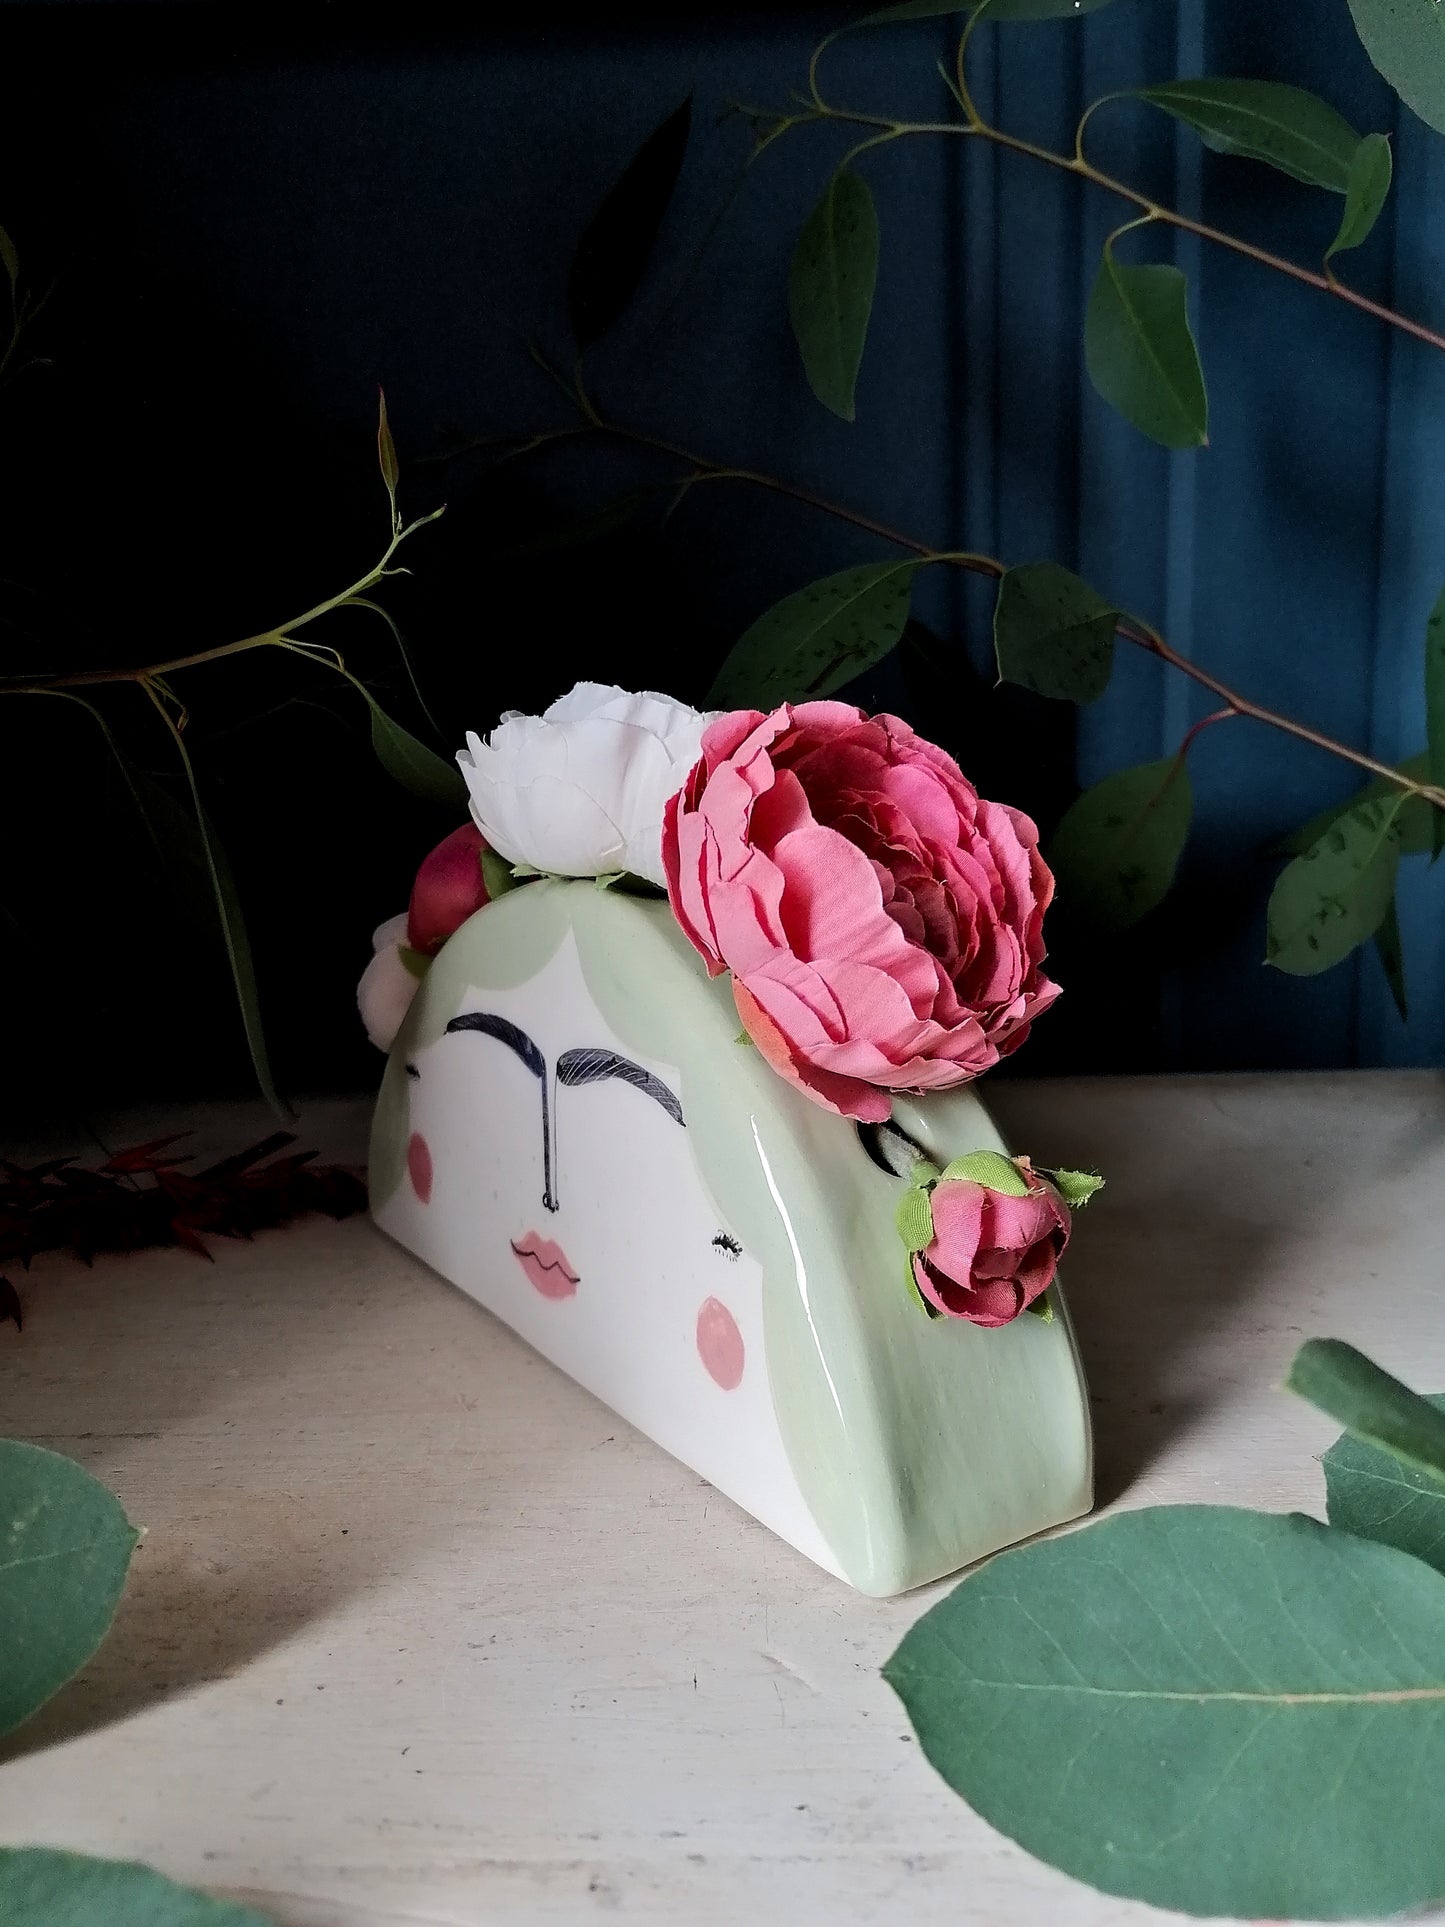 Camellia handmade flower crown ceramic vase